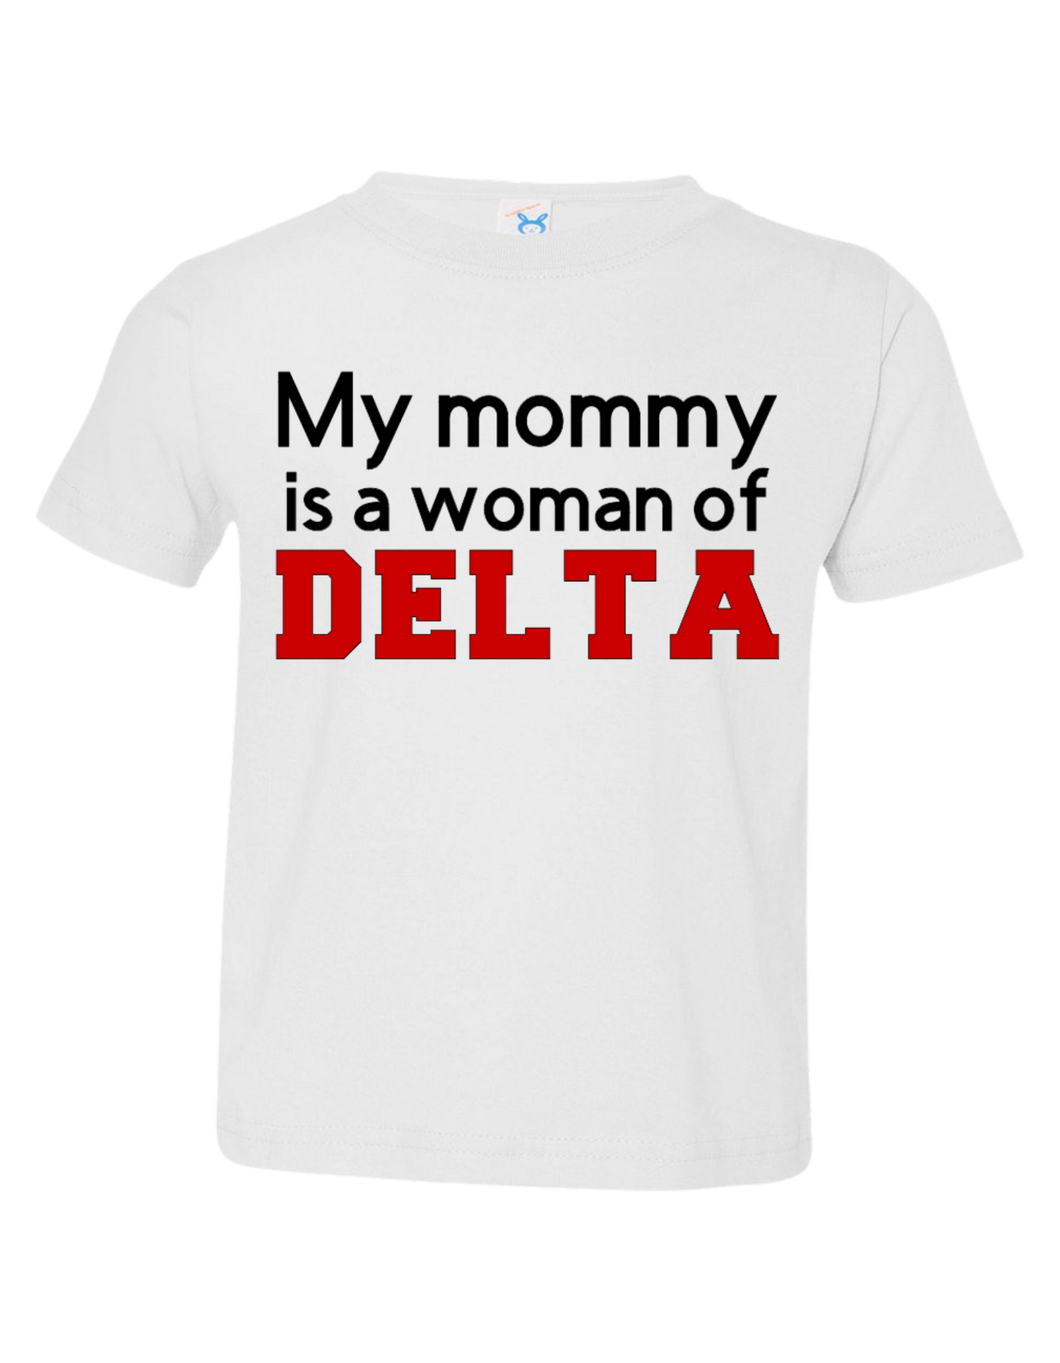 Woman of Delta 9T